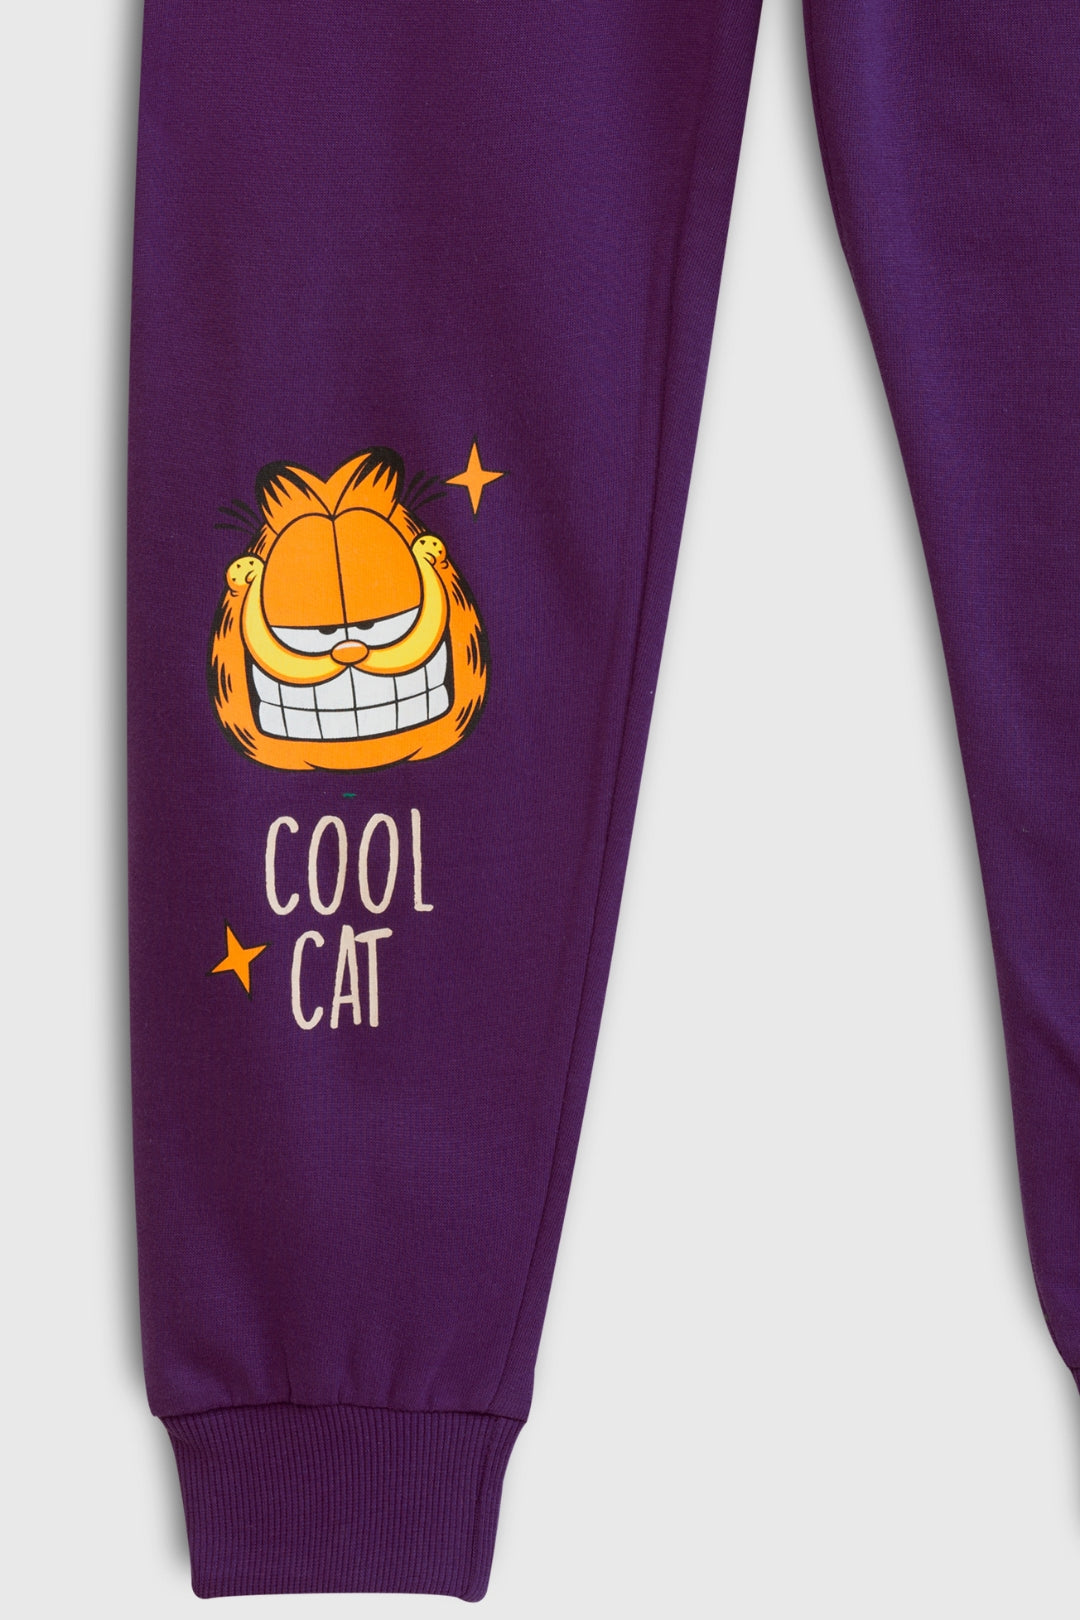 Garfield Classic Purple Co-ord set